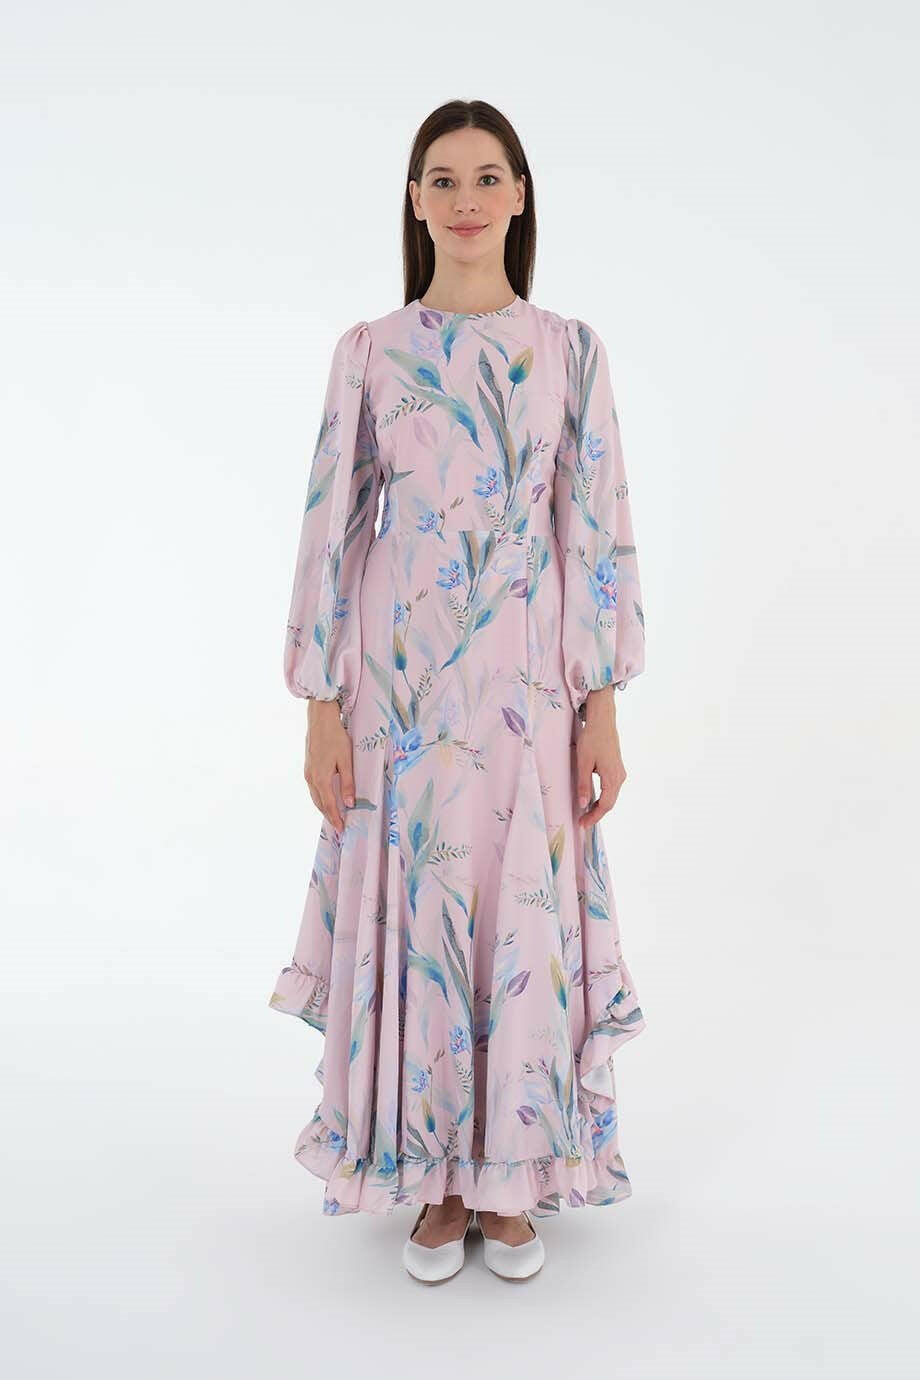 Freya Dress - The perfect modest dress for summer - By Baano